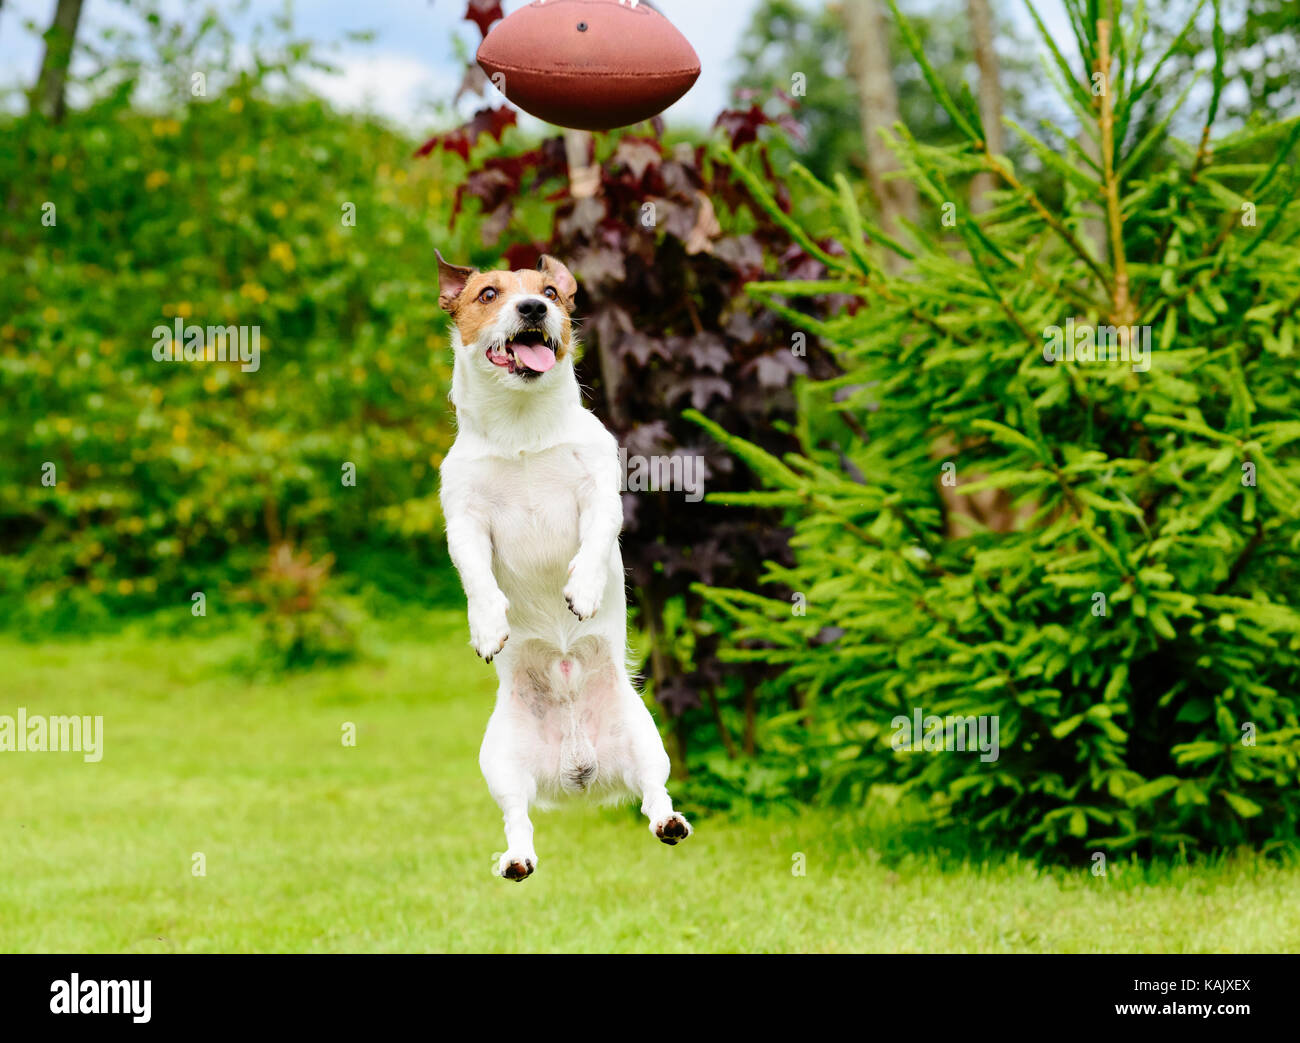 Funny face of dog playing fantasy american football at backyard garden Stock Photo